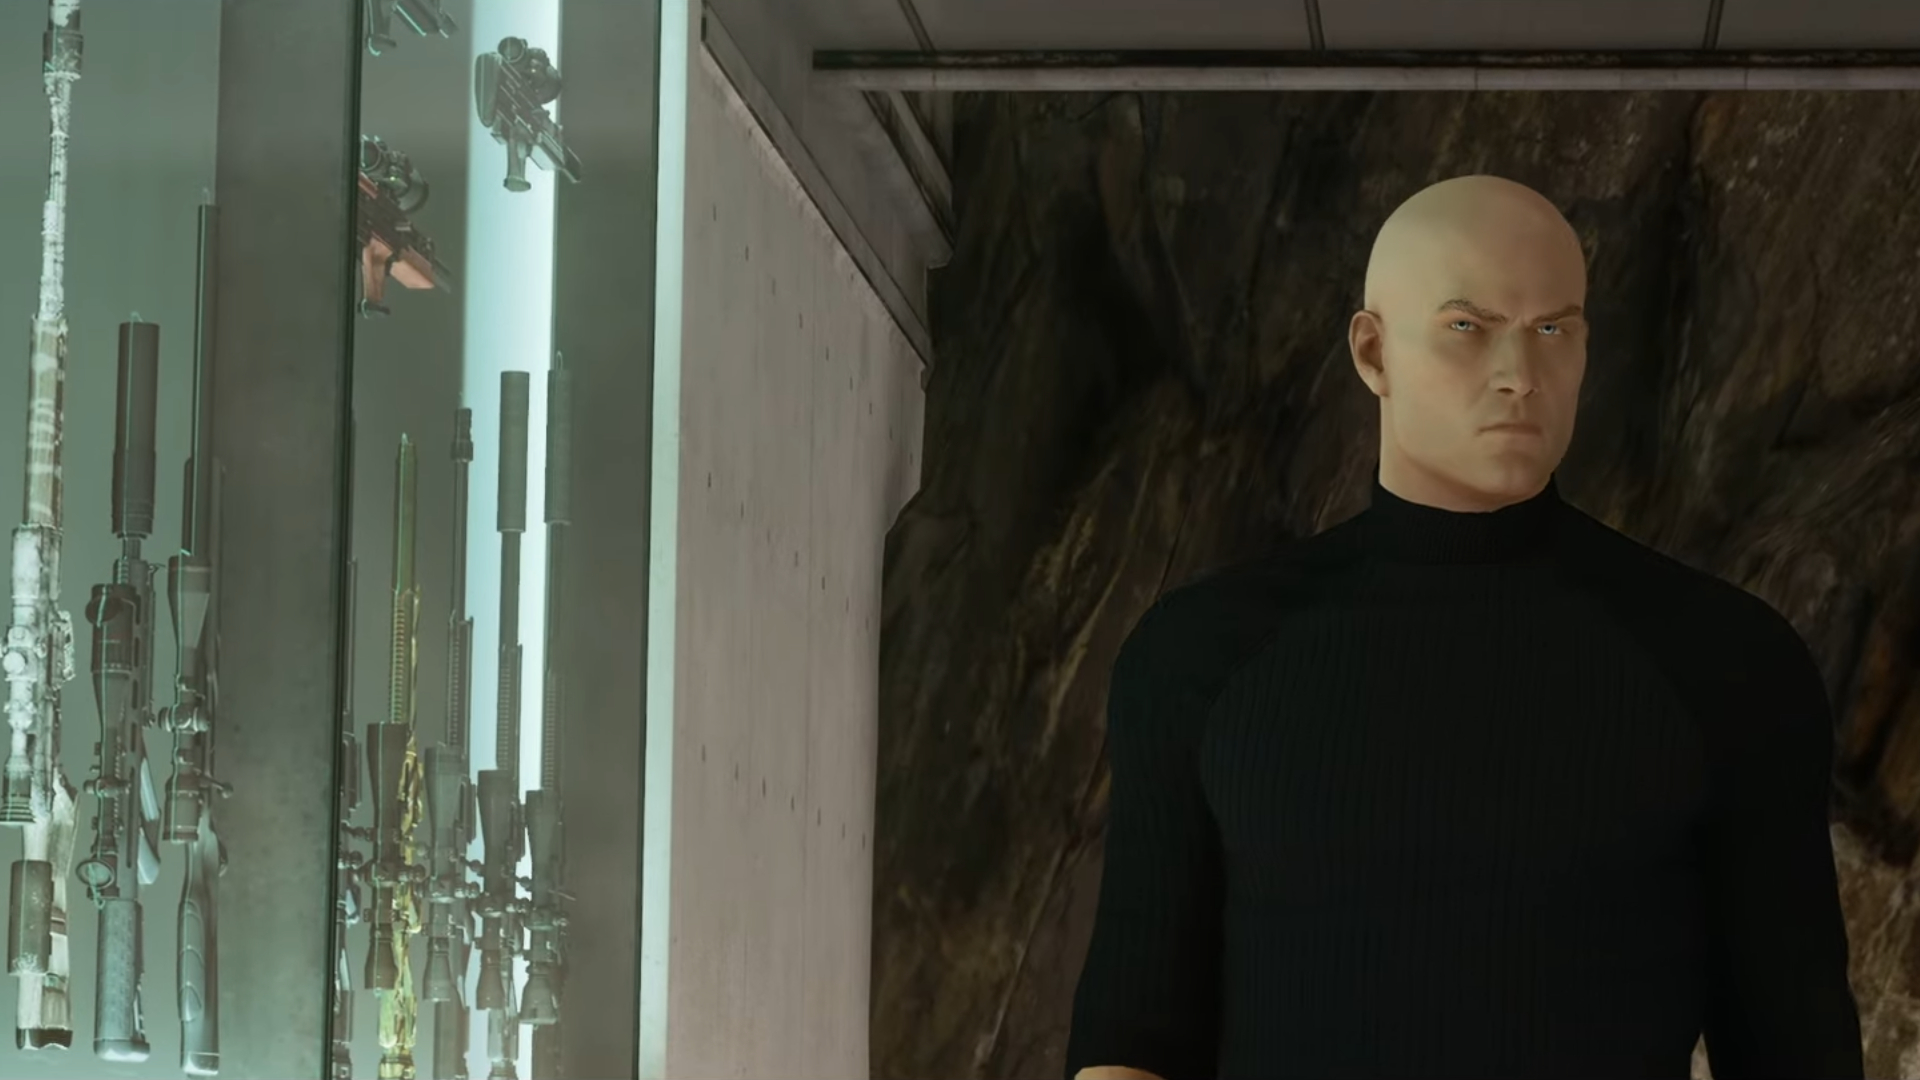 More 'Hitman 3' VR Gameplay Revealed in New Trailer